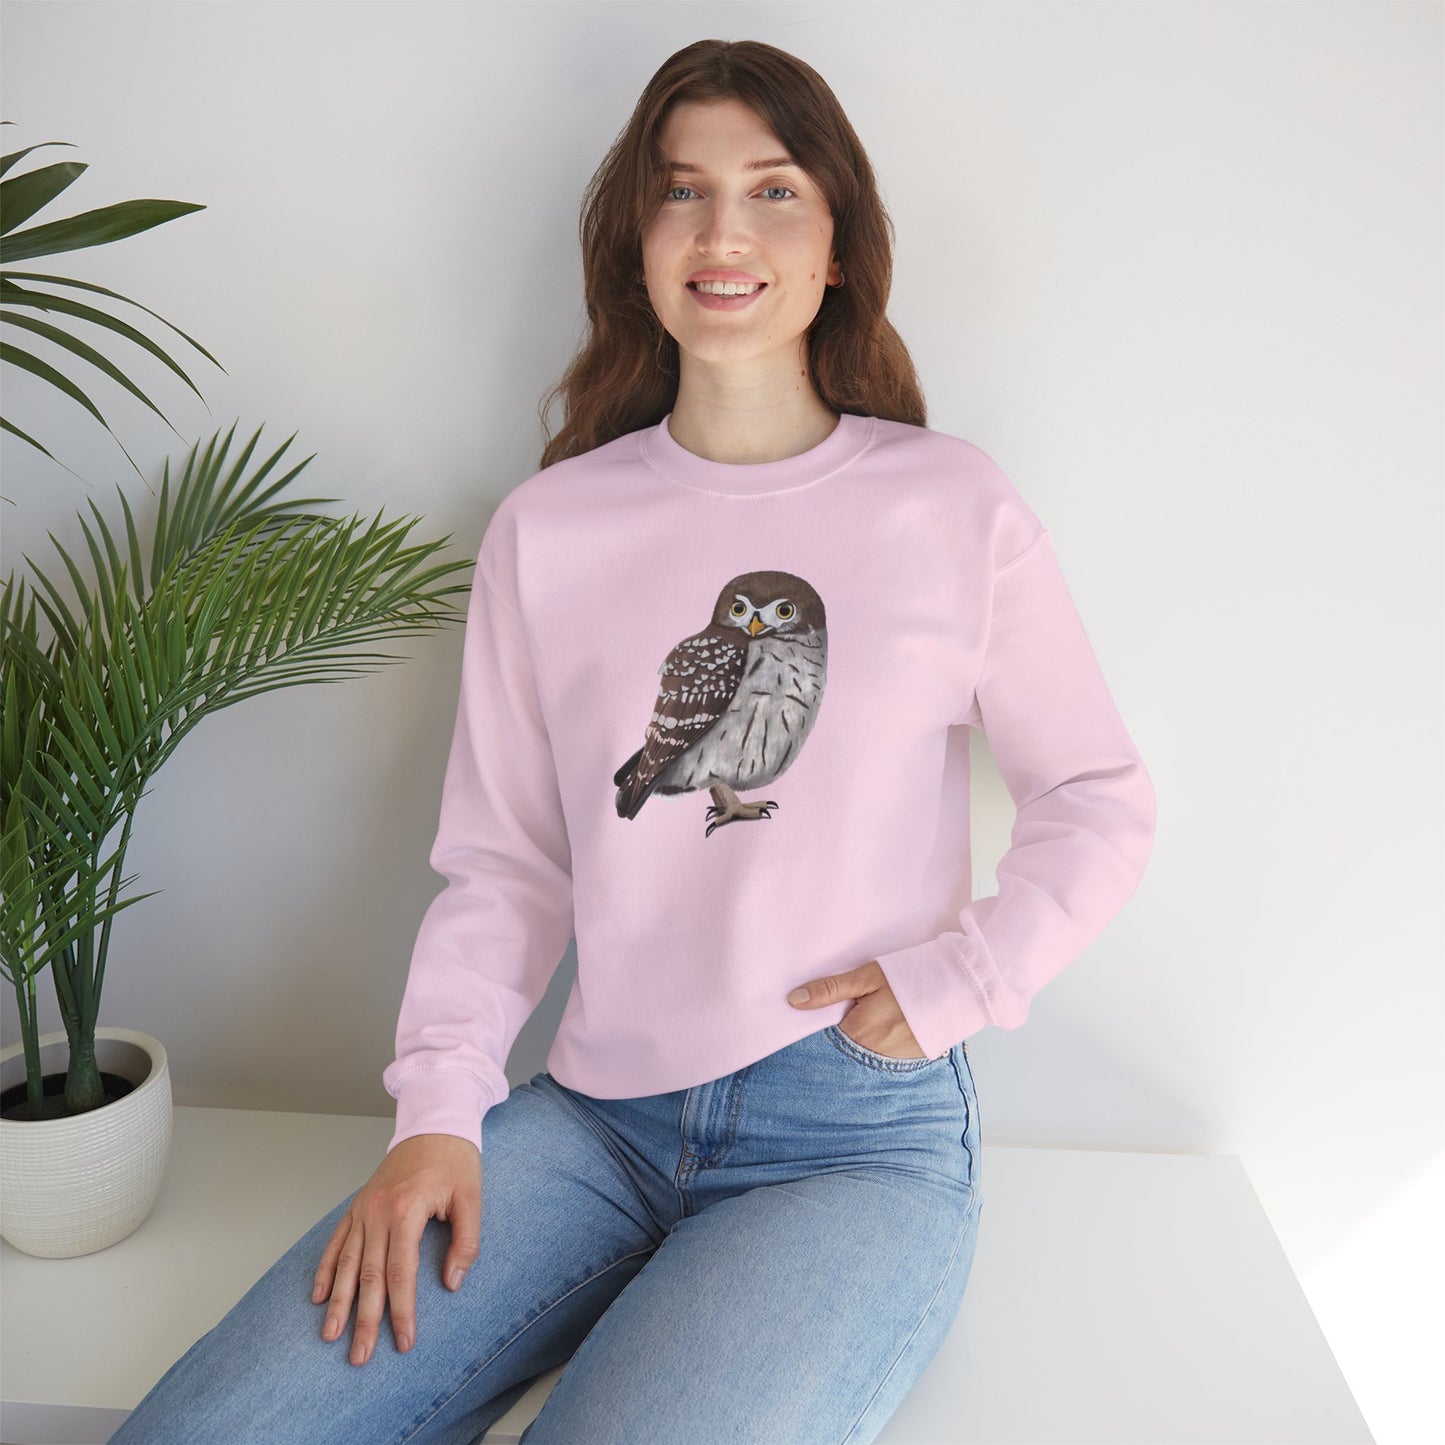 Owl Bird Watcher Biologist Crewneck Sweatshirt